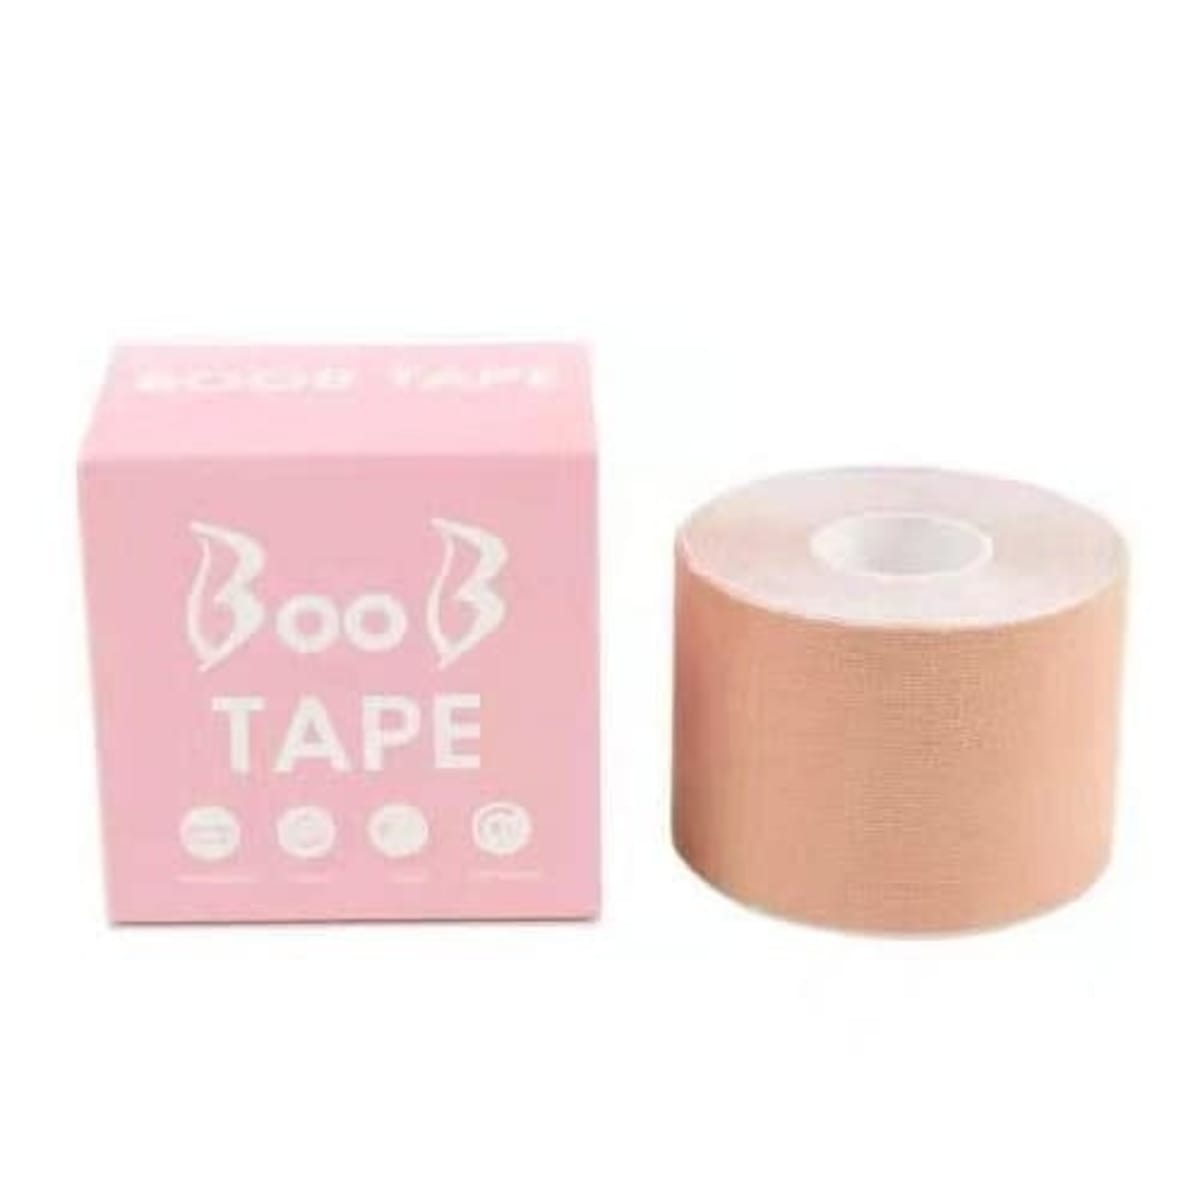 Boob Tape Strapless Bra